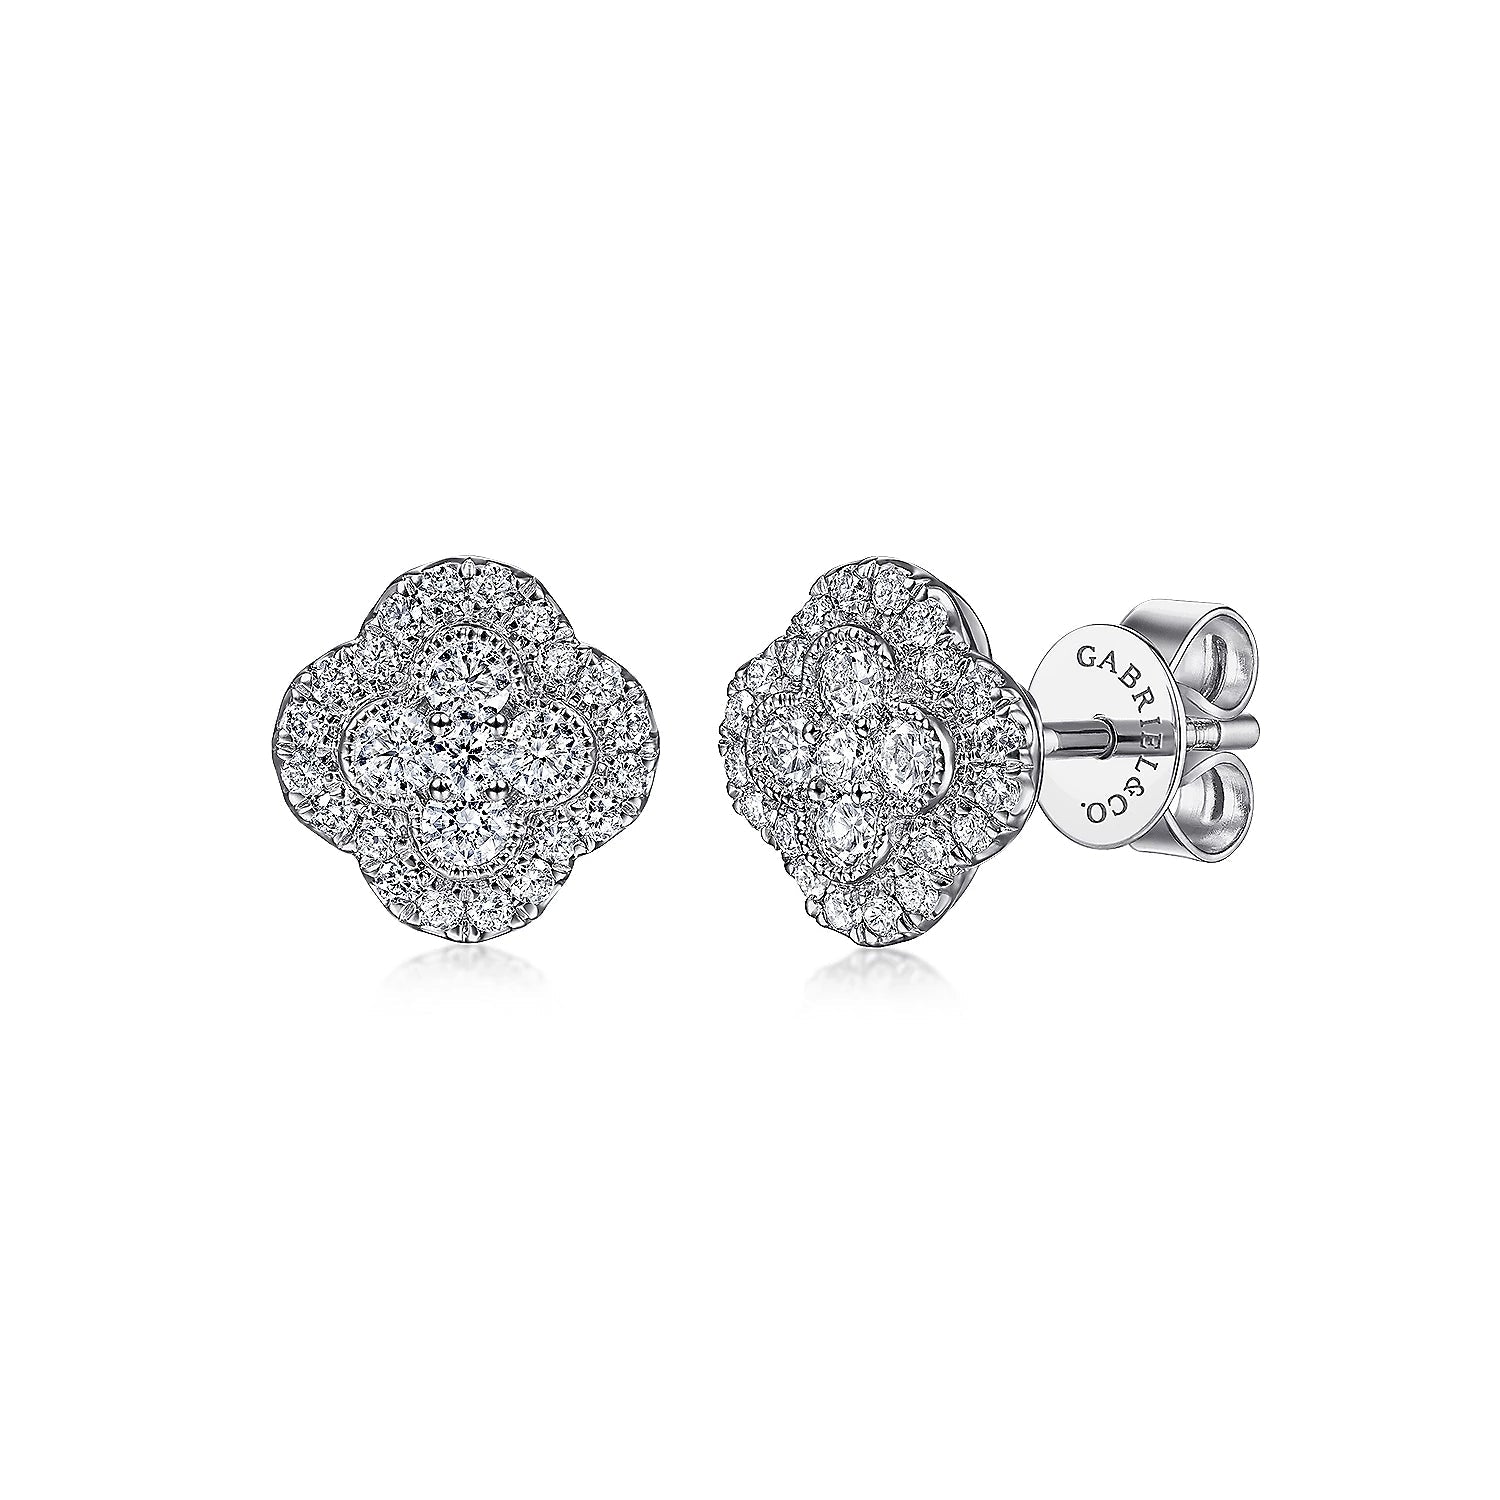 Earrings square shape diamond clusters - Gaines Jewelers